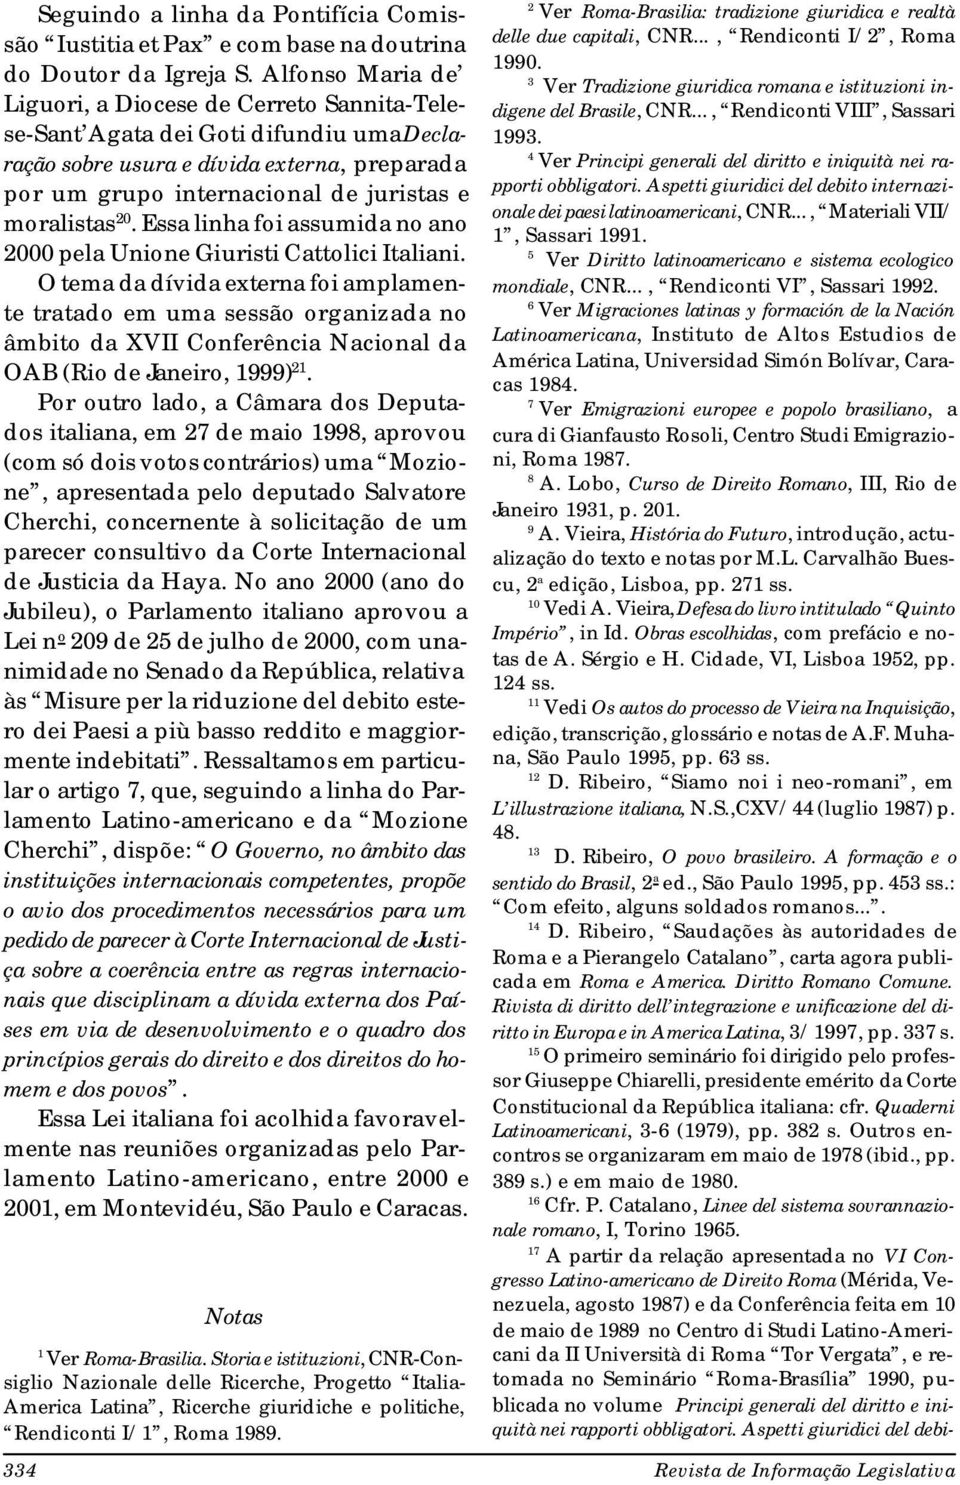 20. Essa linha foi assumida no ano 2000 pela Unione Giuristi Cattolici Italiani.